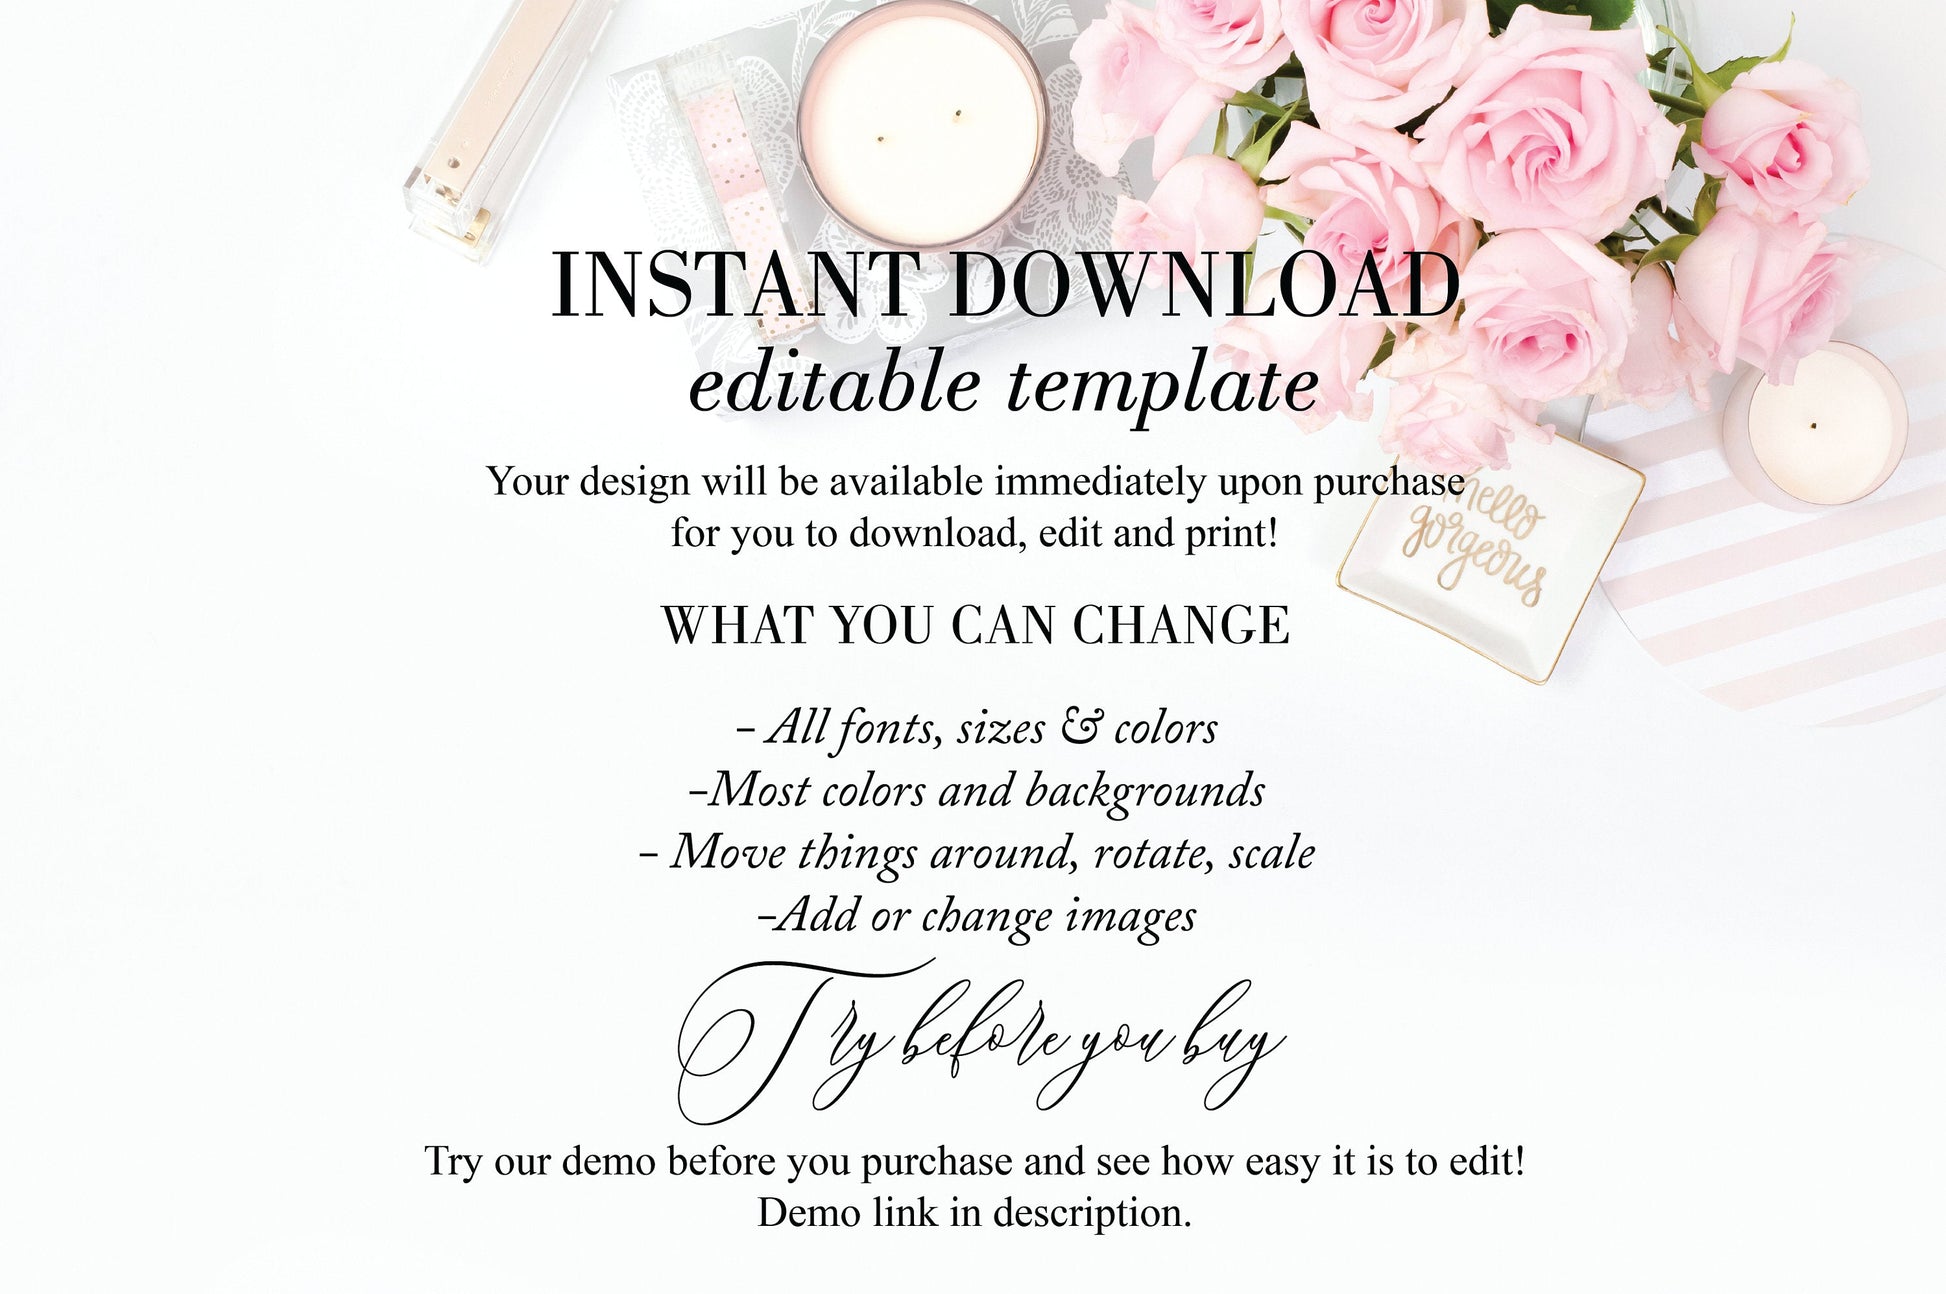 Greenery Geometric Wedding Invitation Template, Printable DIY Instant Download Invites, 100% Editable Invitations -Abi WEDDING INVITATIONS SAVVY PAPER CO